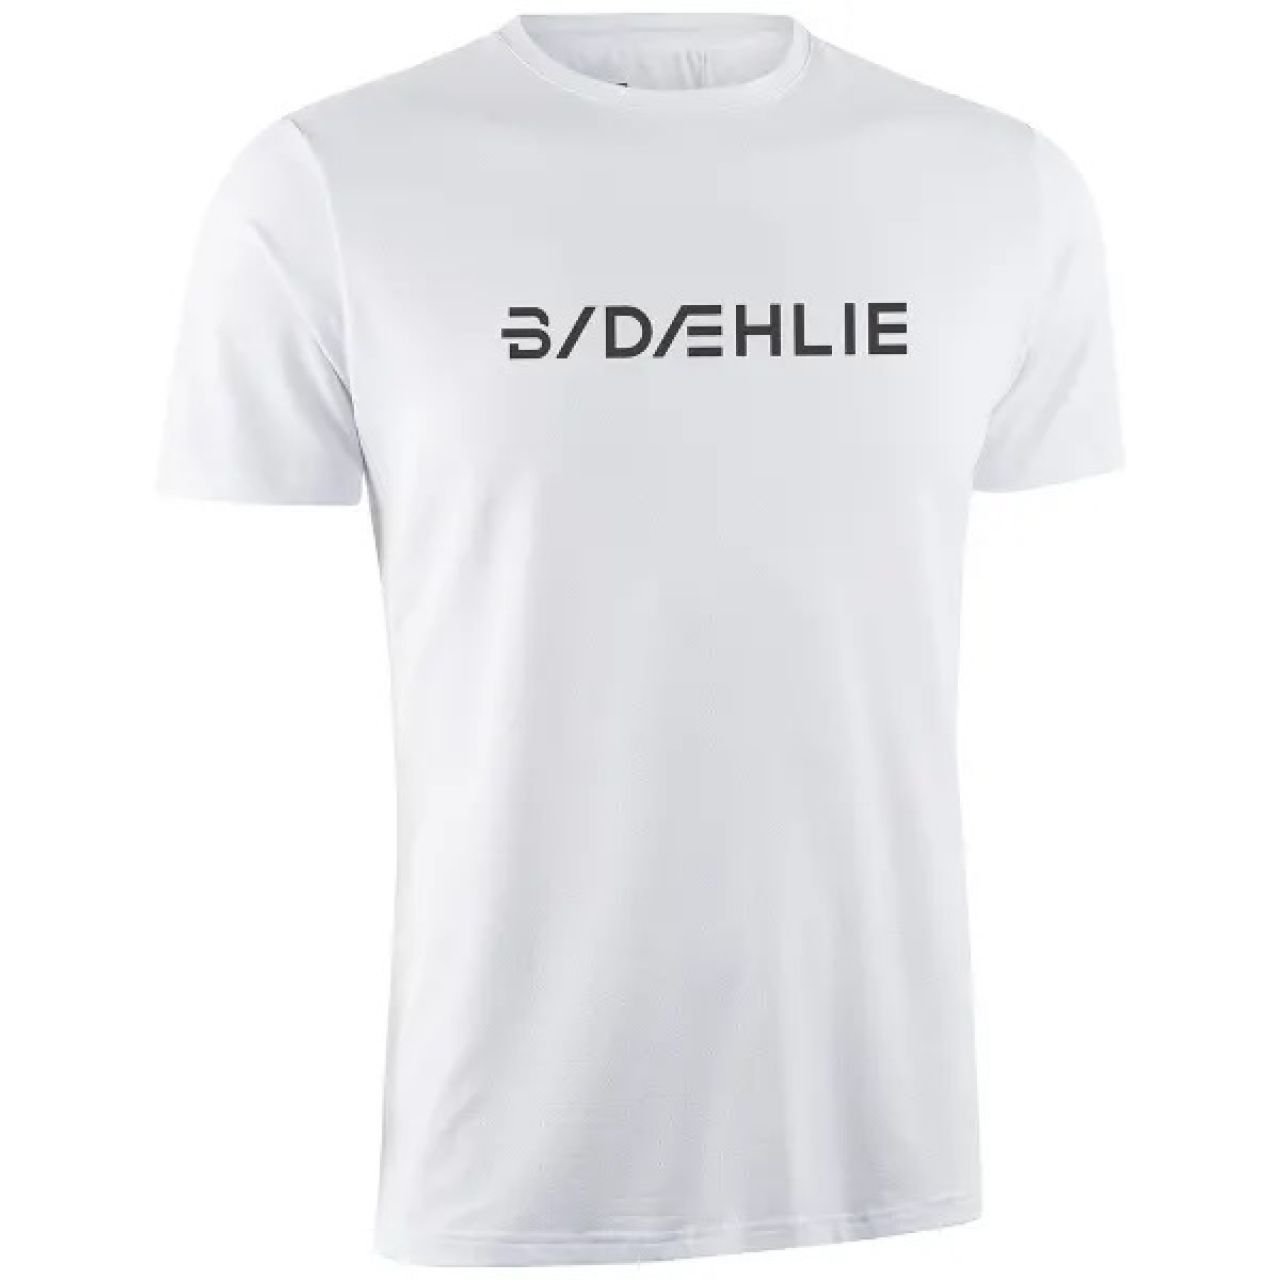 DAEHLIE TEE SHIRT FOCUS BRILLIANT WHITE tee shirt running